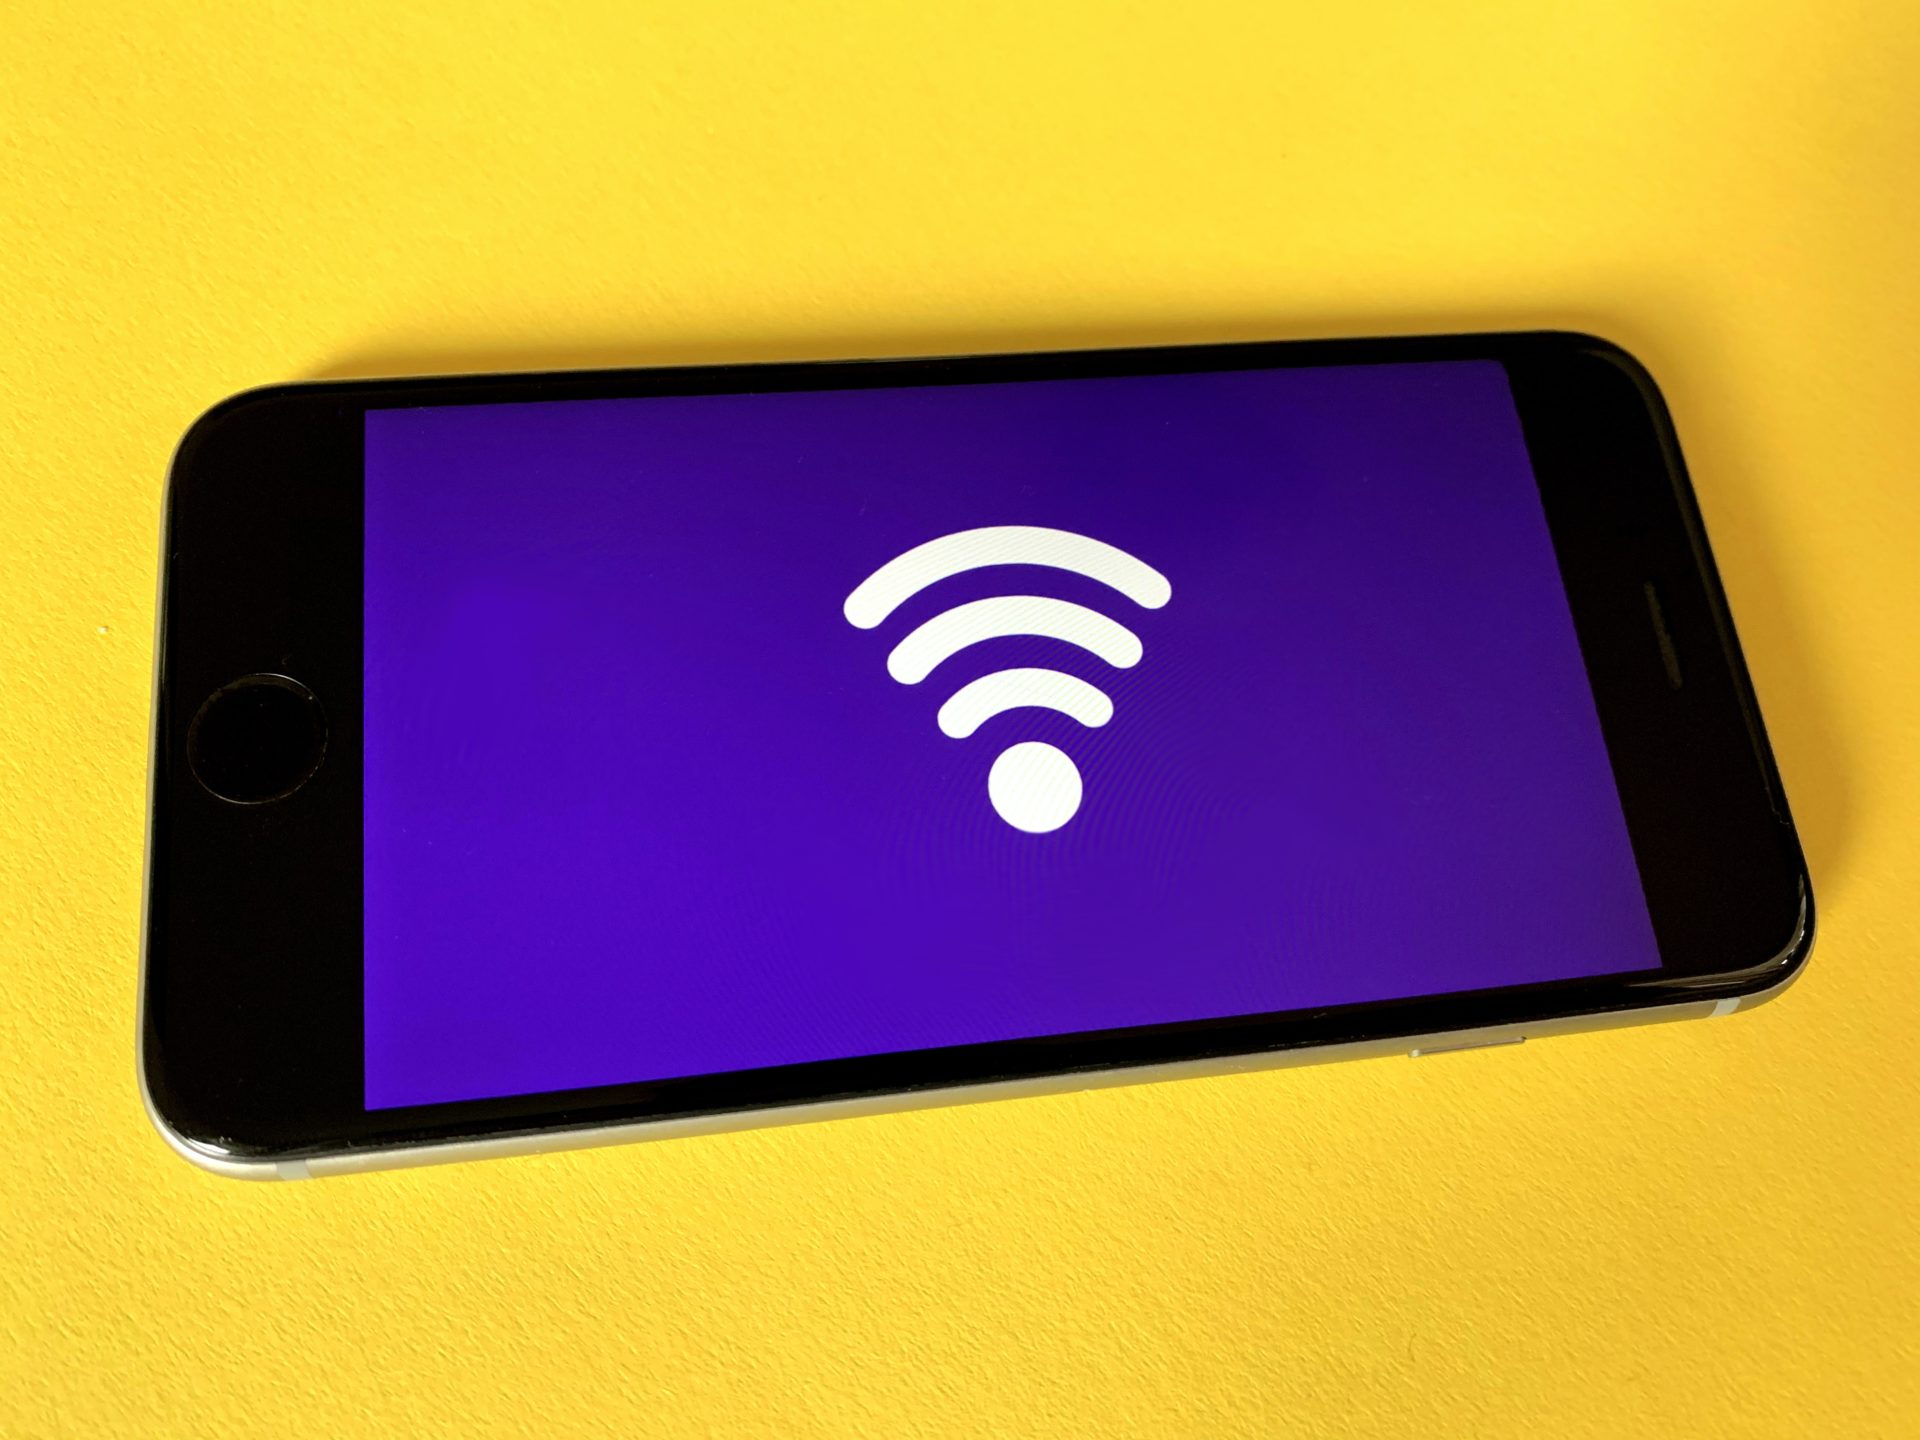 A phone displaying Wi-Fi symbol